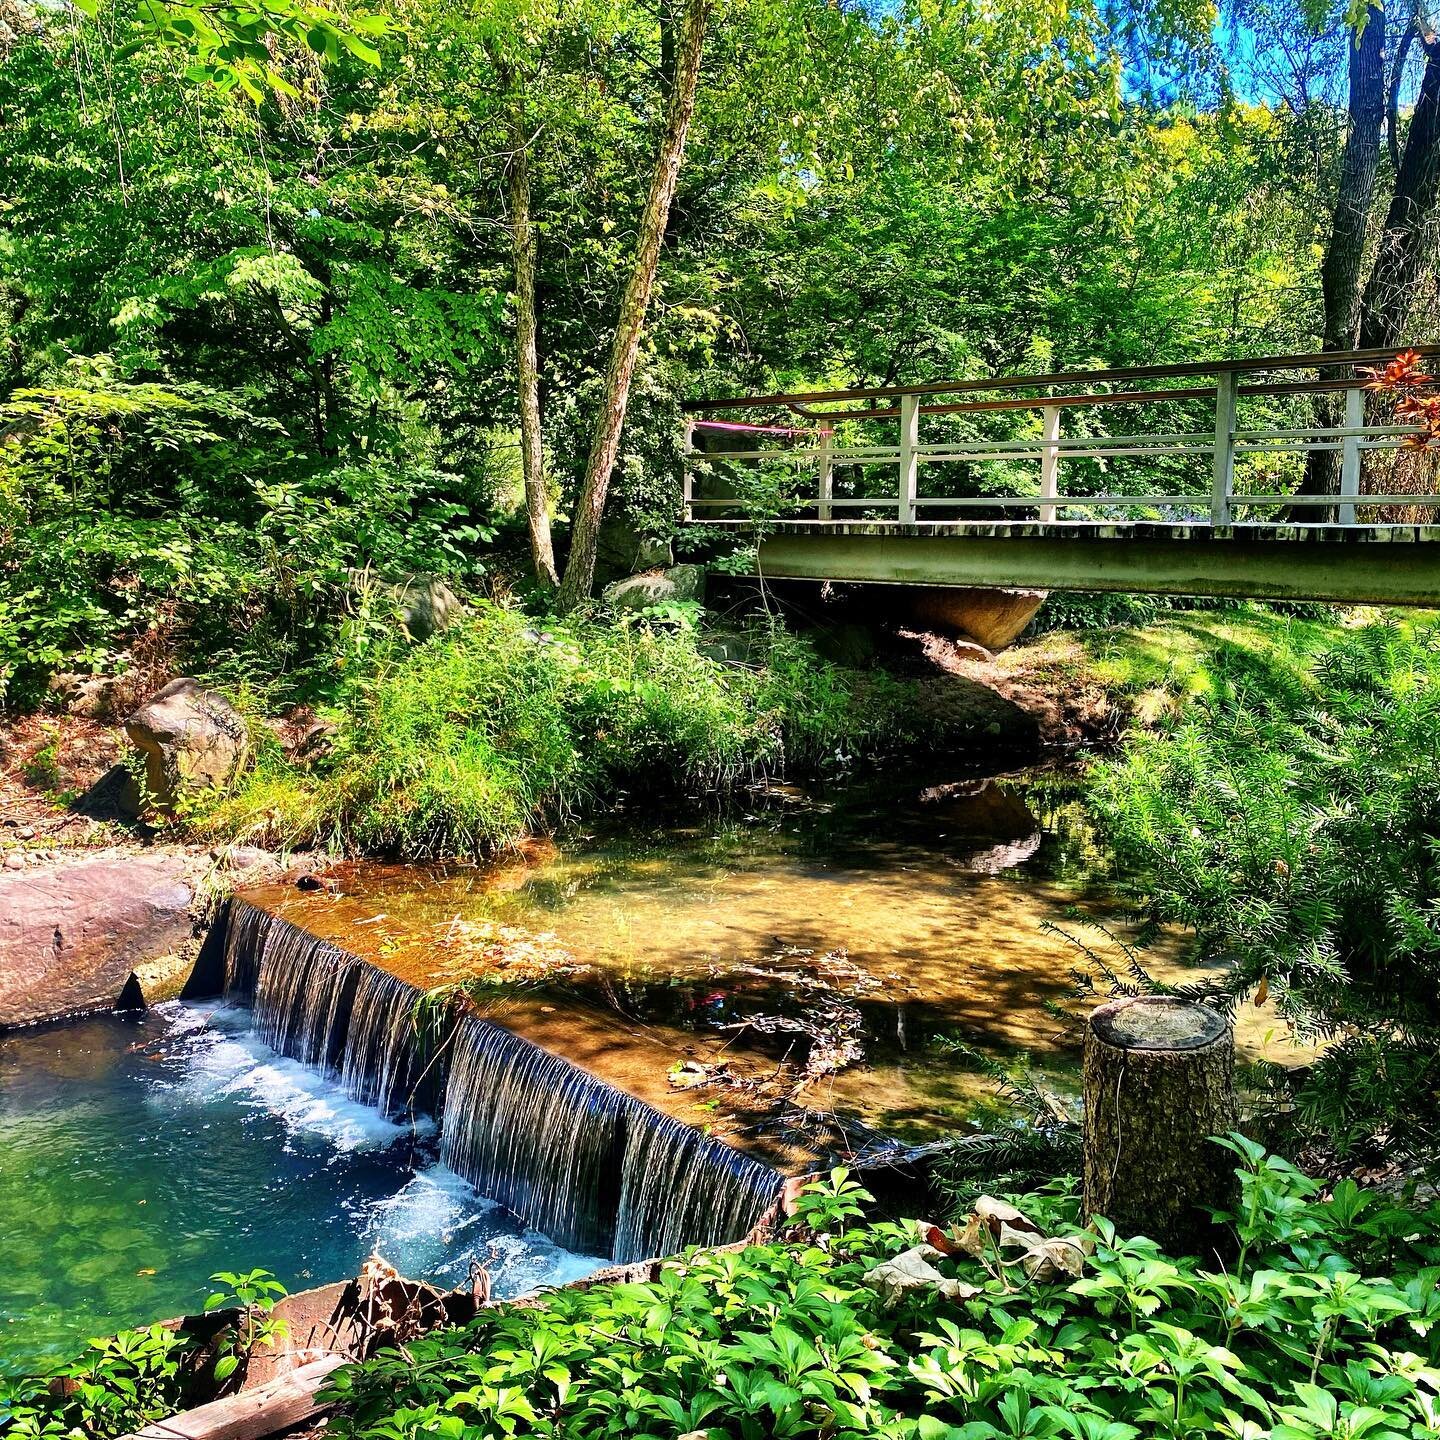 A bridge over falling water. 
Anderson Japanese Garden. Rockford. Illinois.